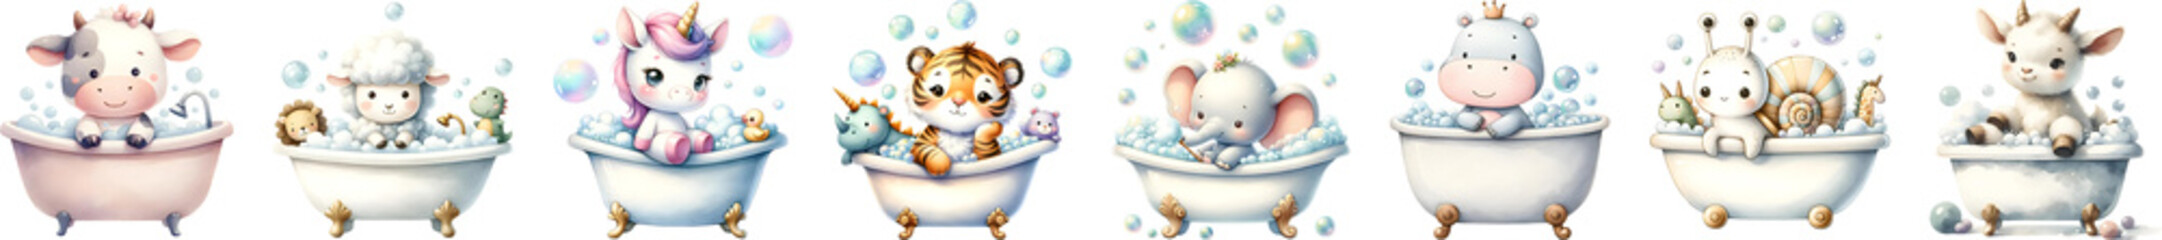 Baby animal shower in bath, watercolor illustration.